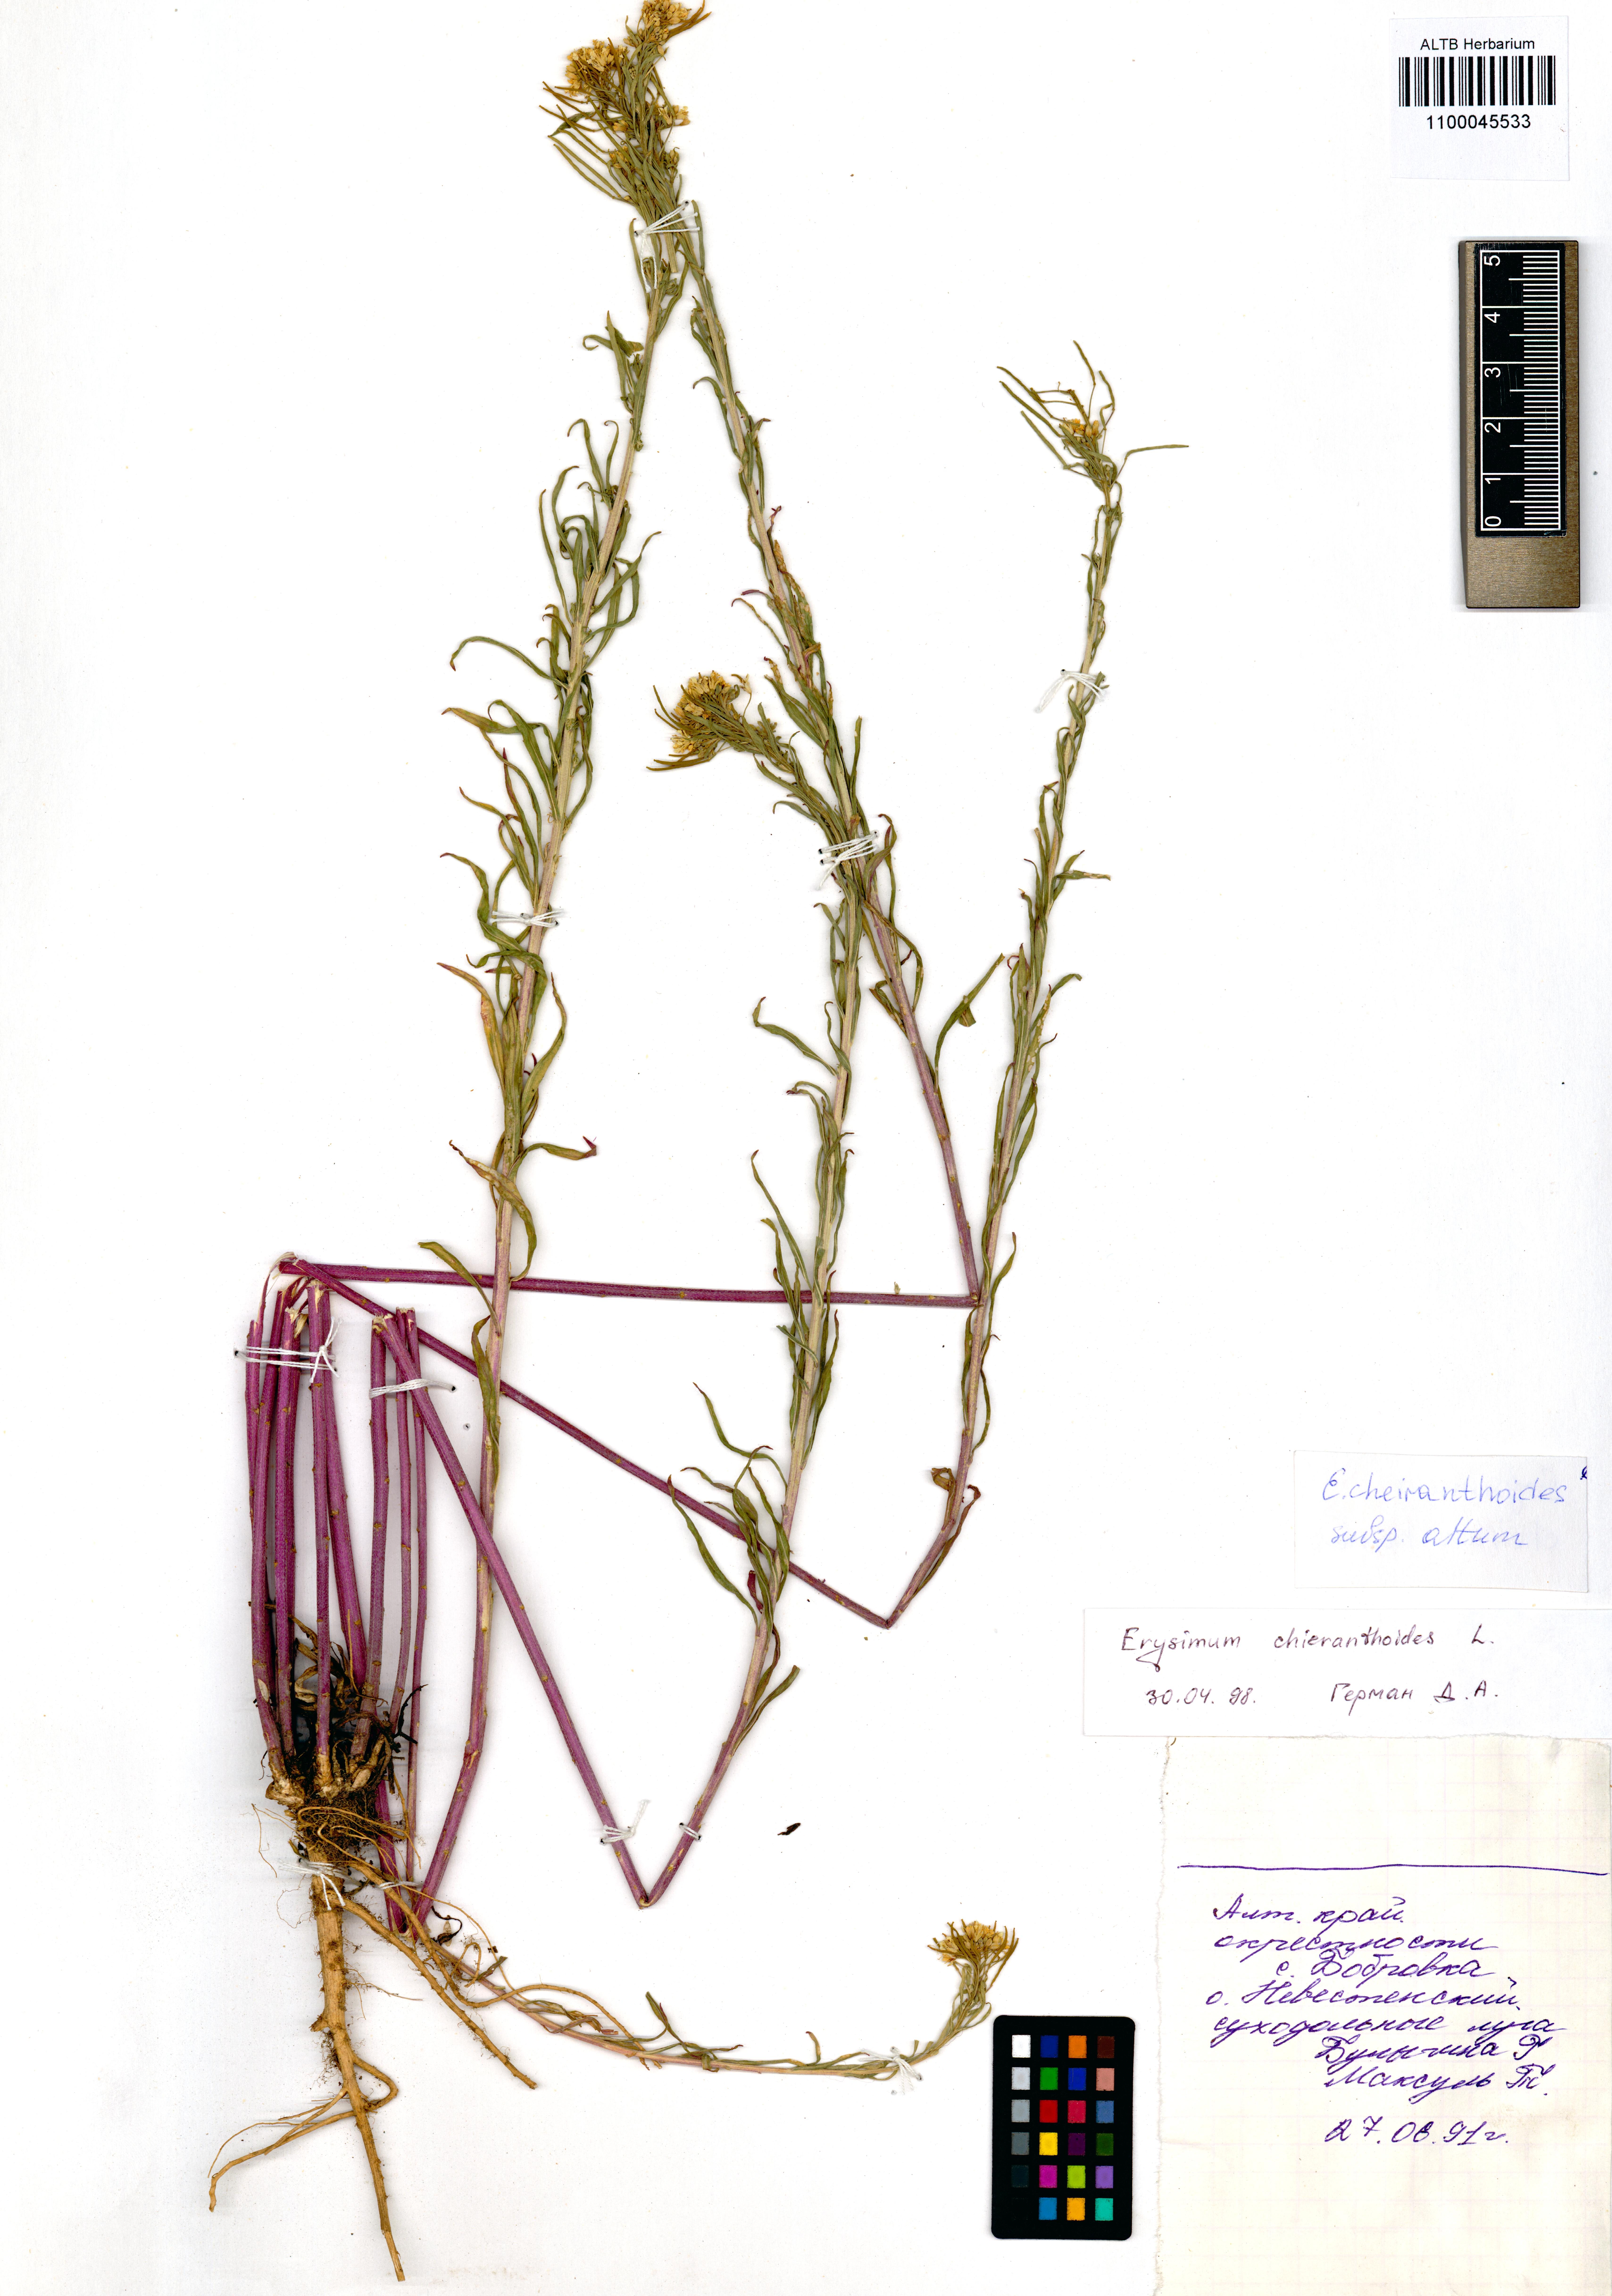 Erysimum cheiranthoides L.